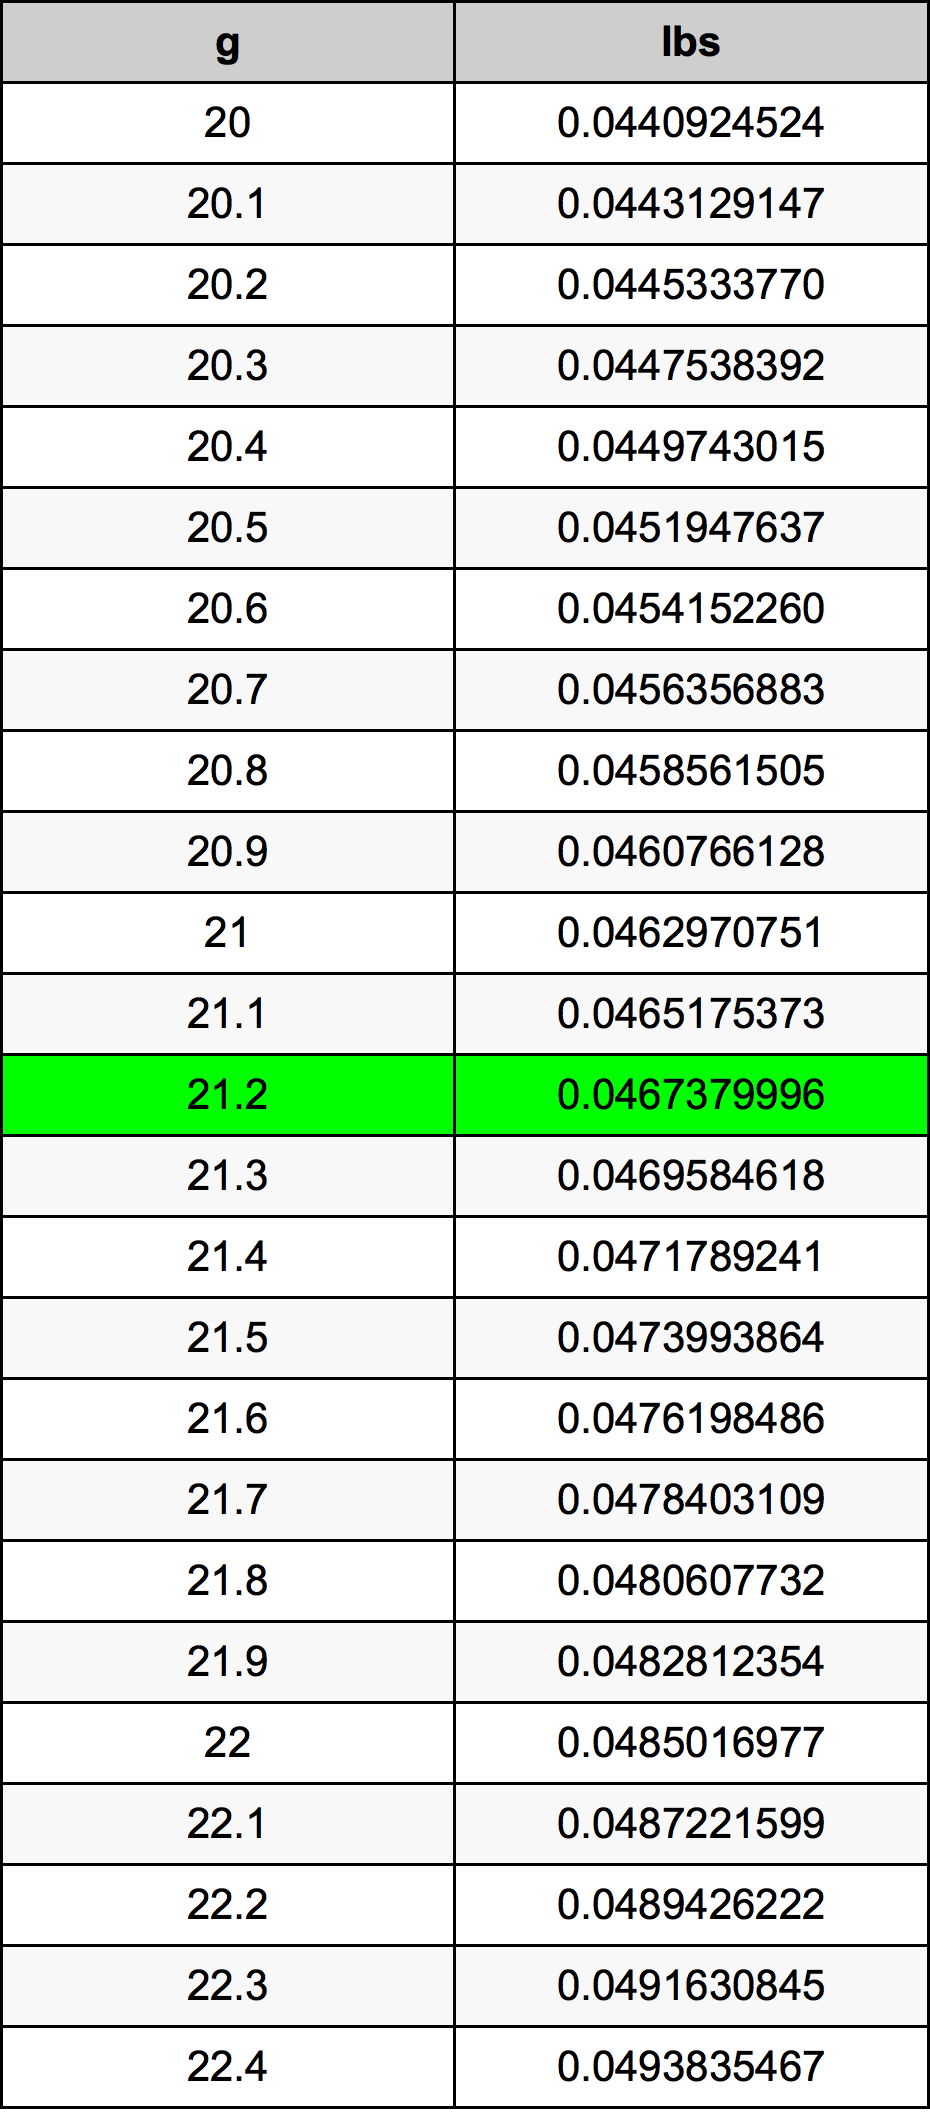 21.2 غرام جدول تحويل